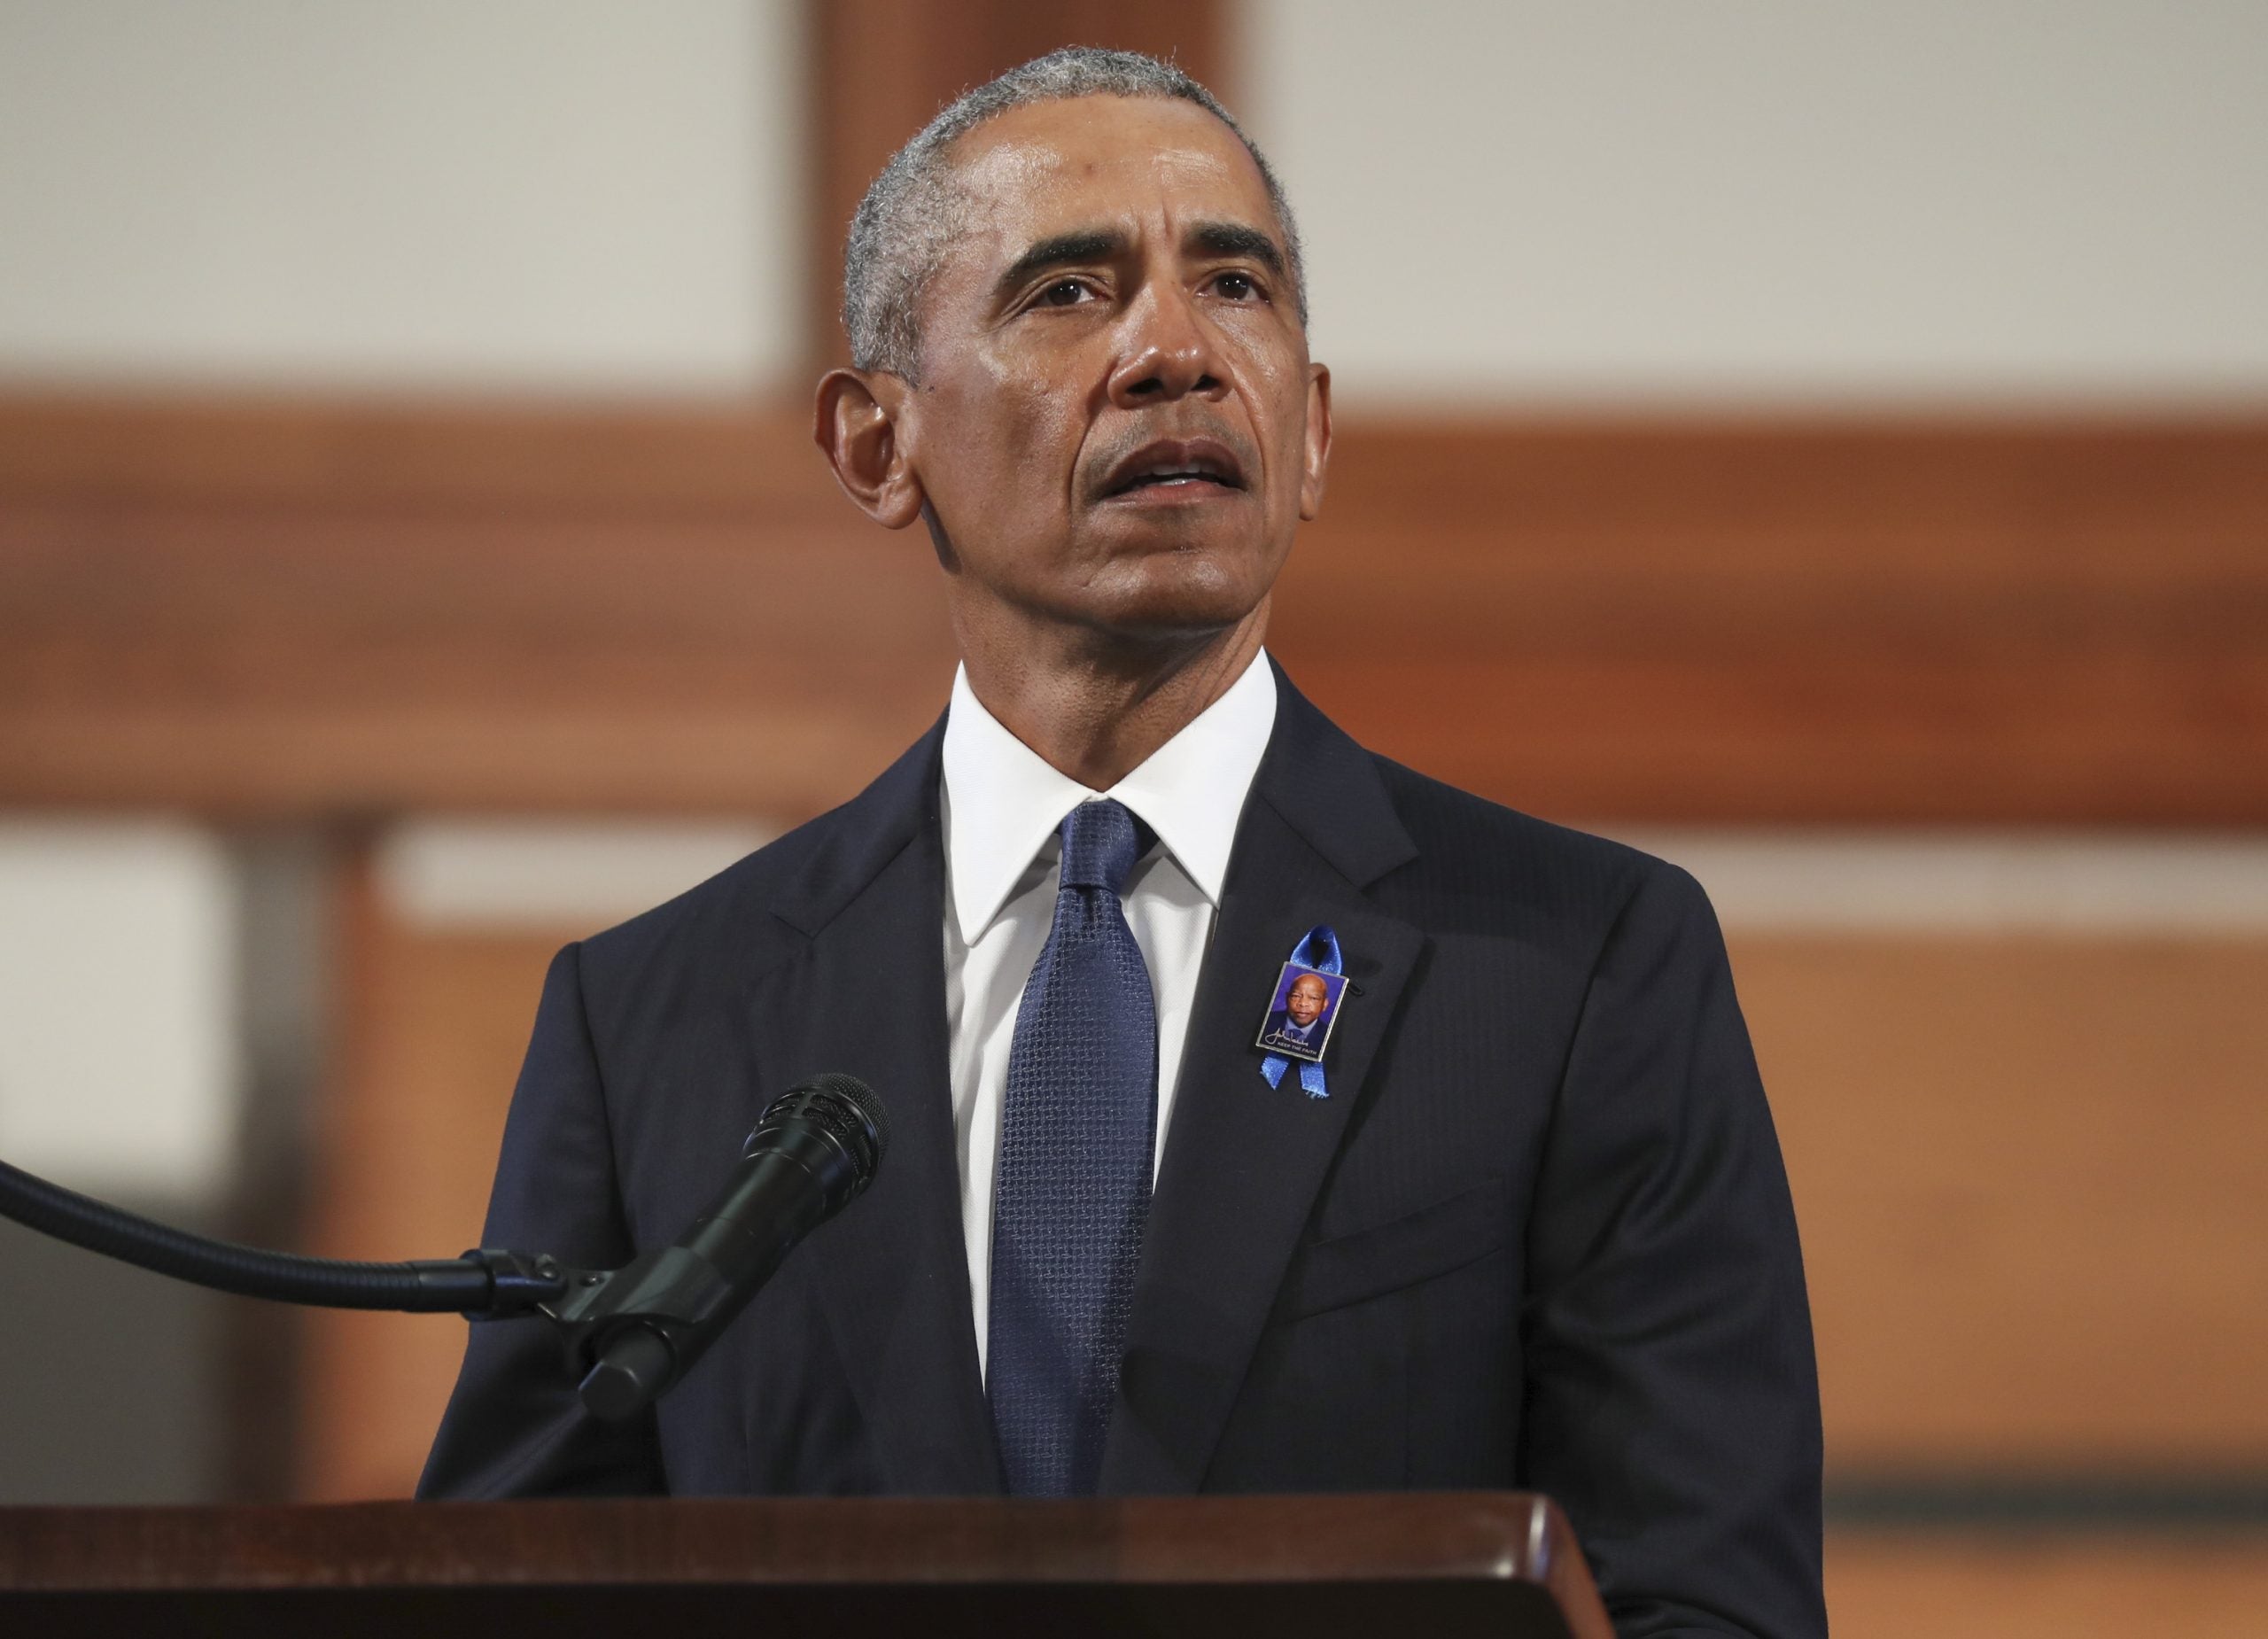 Barack Obama Says He Broke His Peer's Nose For Calling Him A Racial Slur